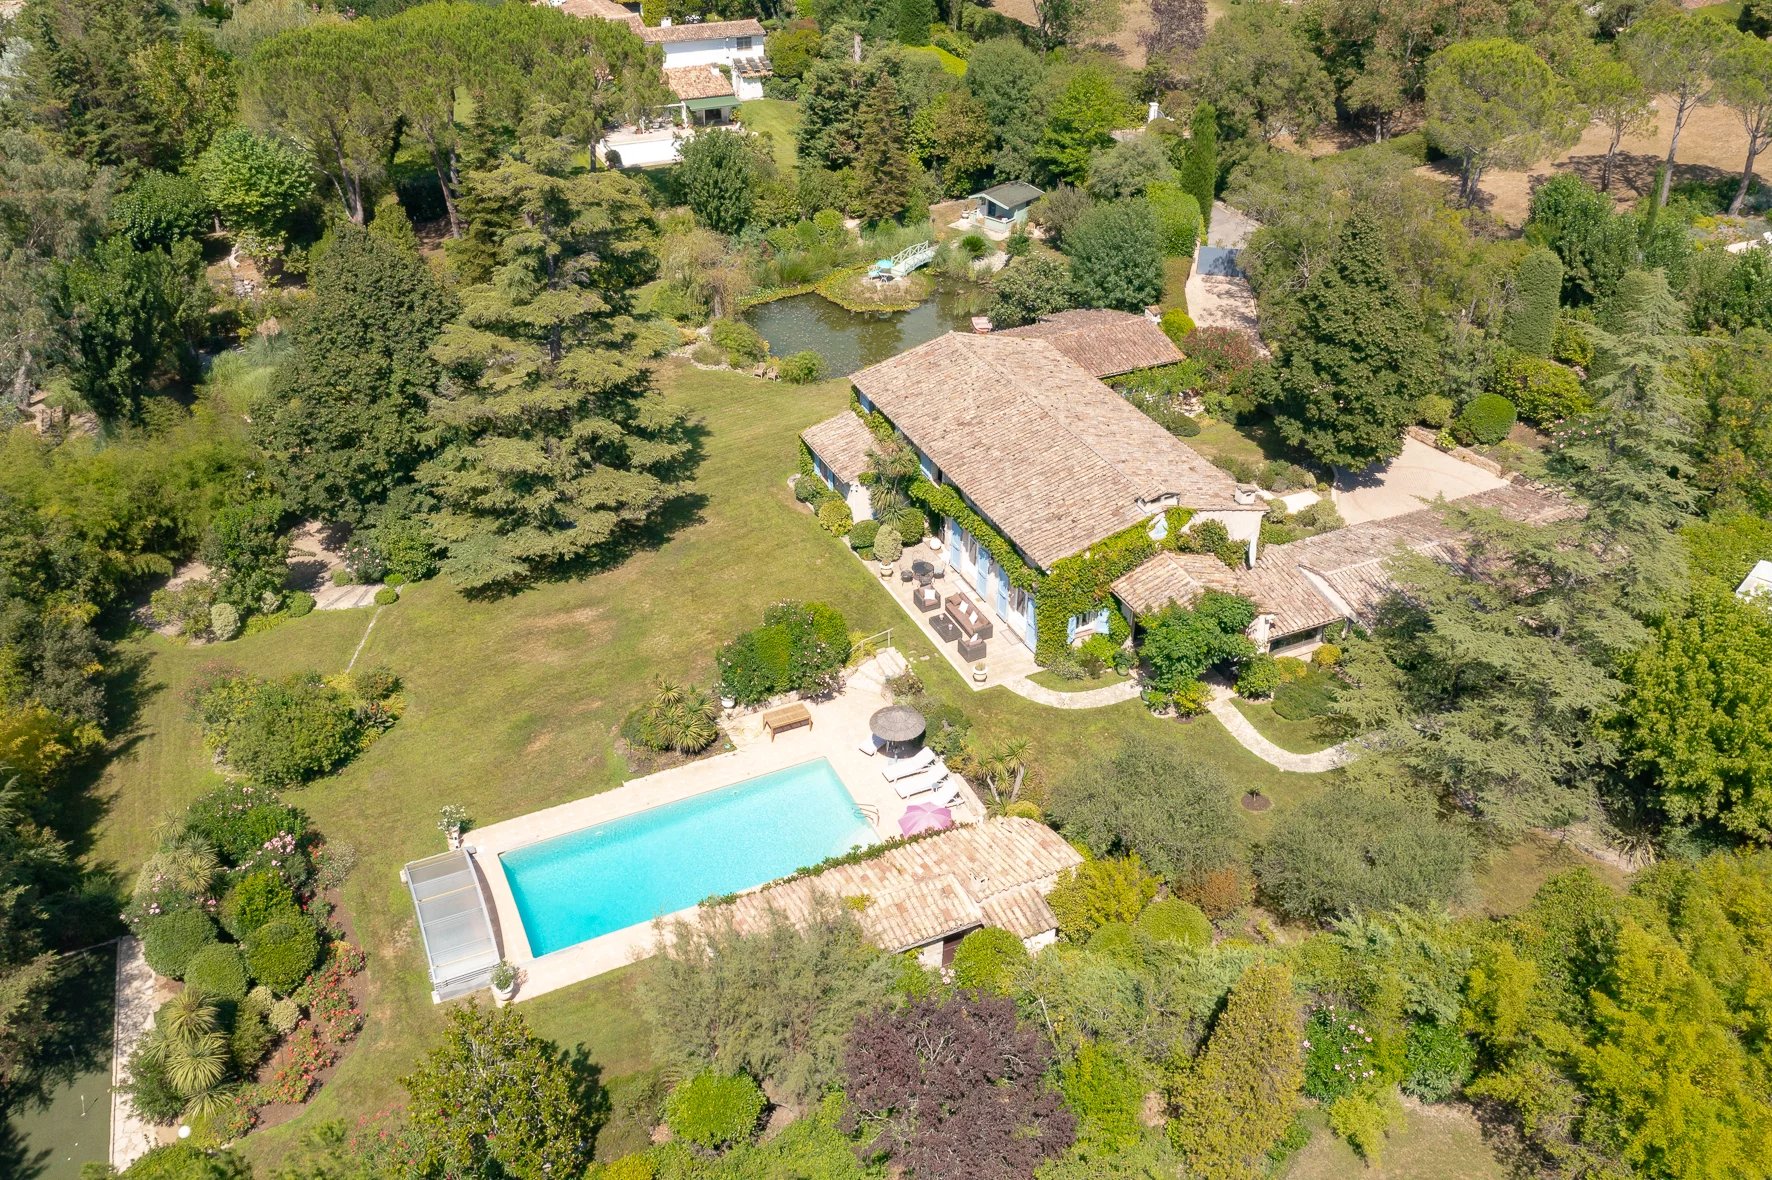 Cannes hinterland, splendid Provençal villa, set in a sought-after private domain.